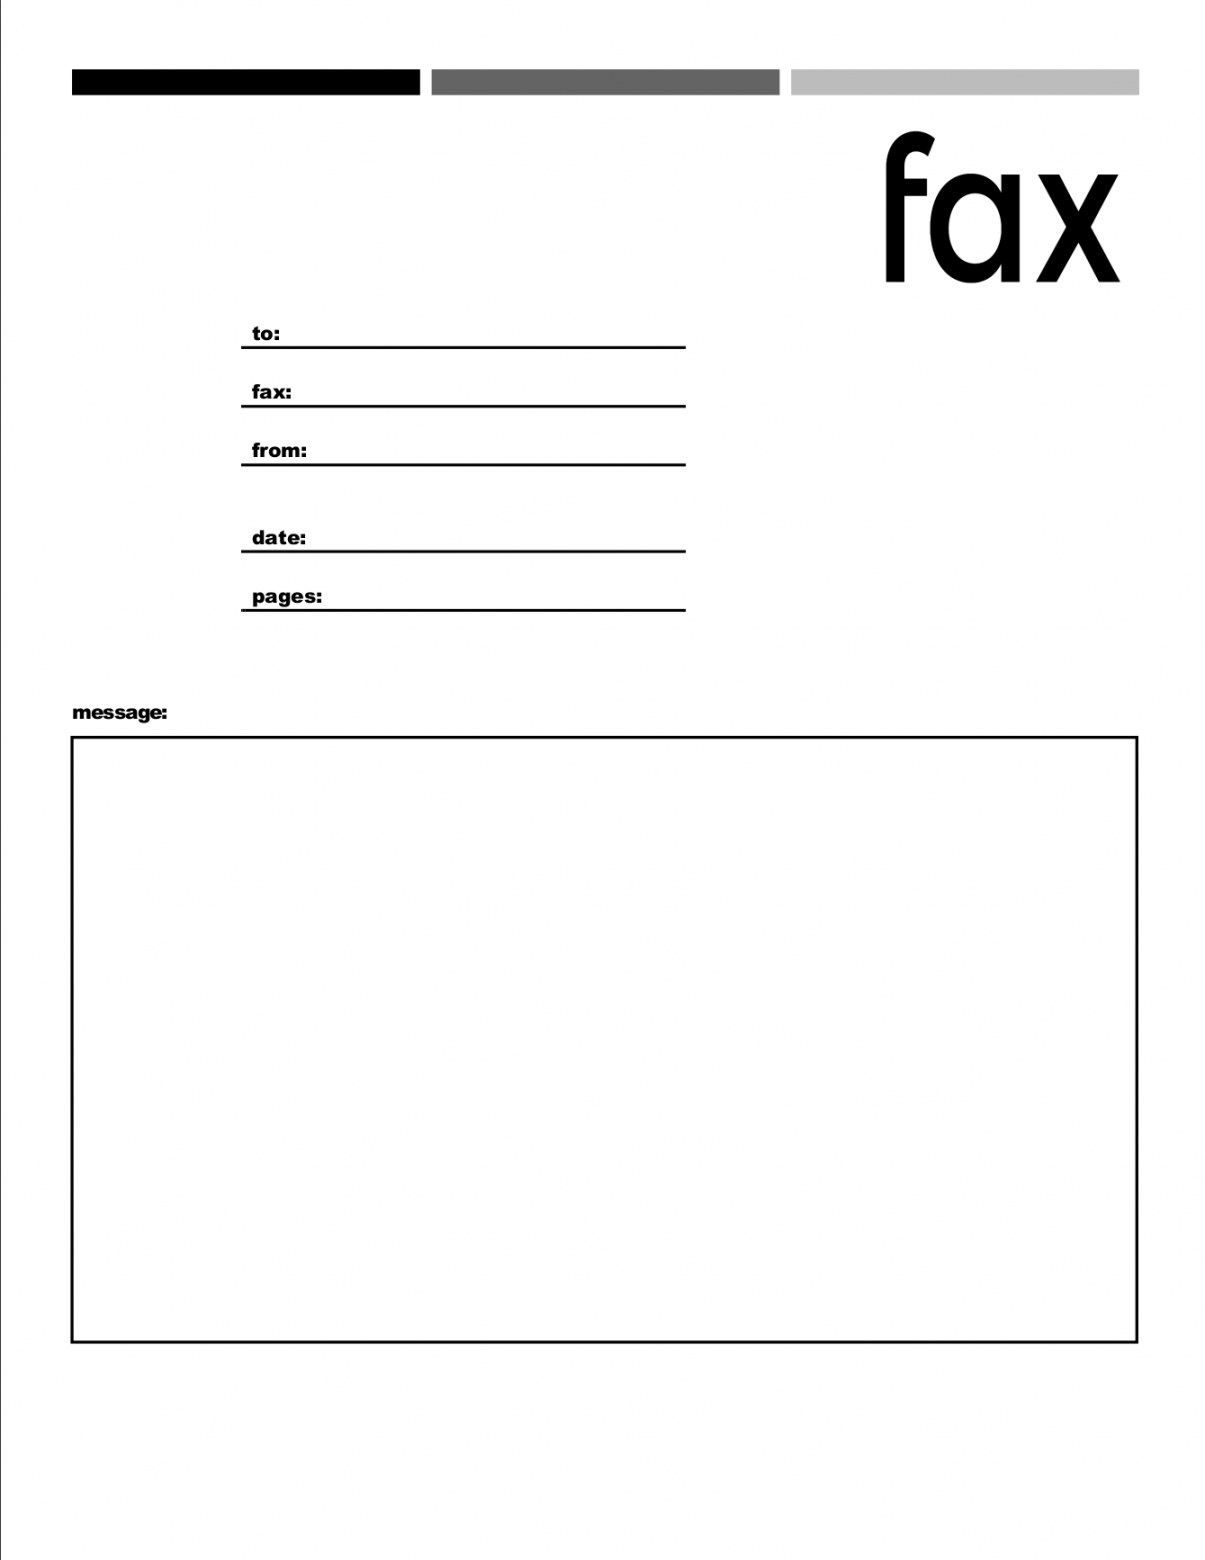 Printable Fax Cover Sheet Free - Printable - Free Fax Cover Sheets  FaxBurner